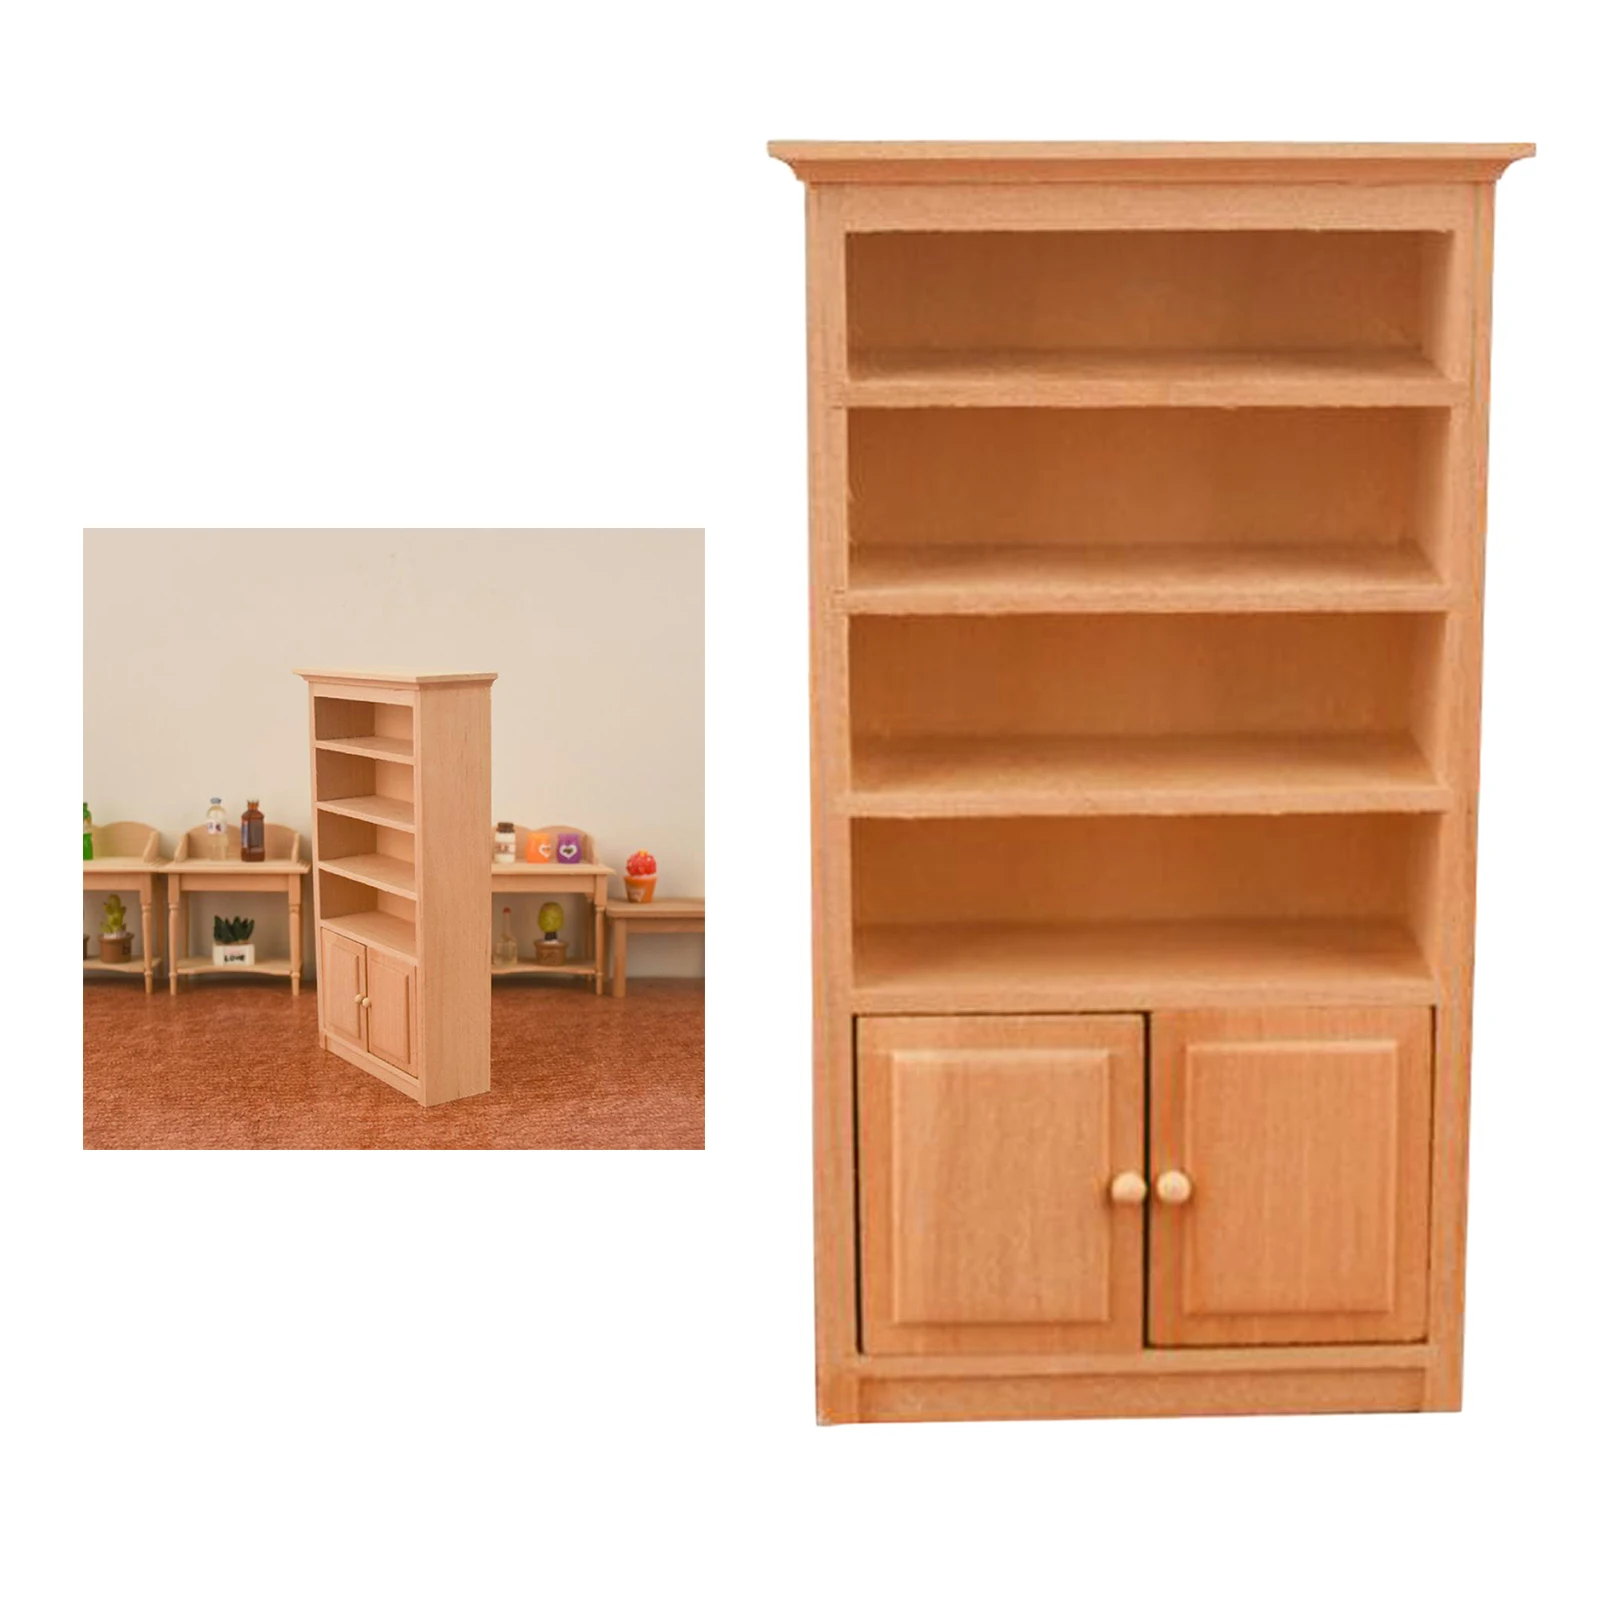 1:12 Mini Wood Cabinet Bookshelf Simulation Model Furniture Supplies Accs